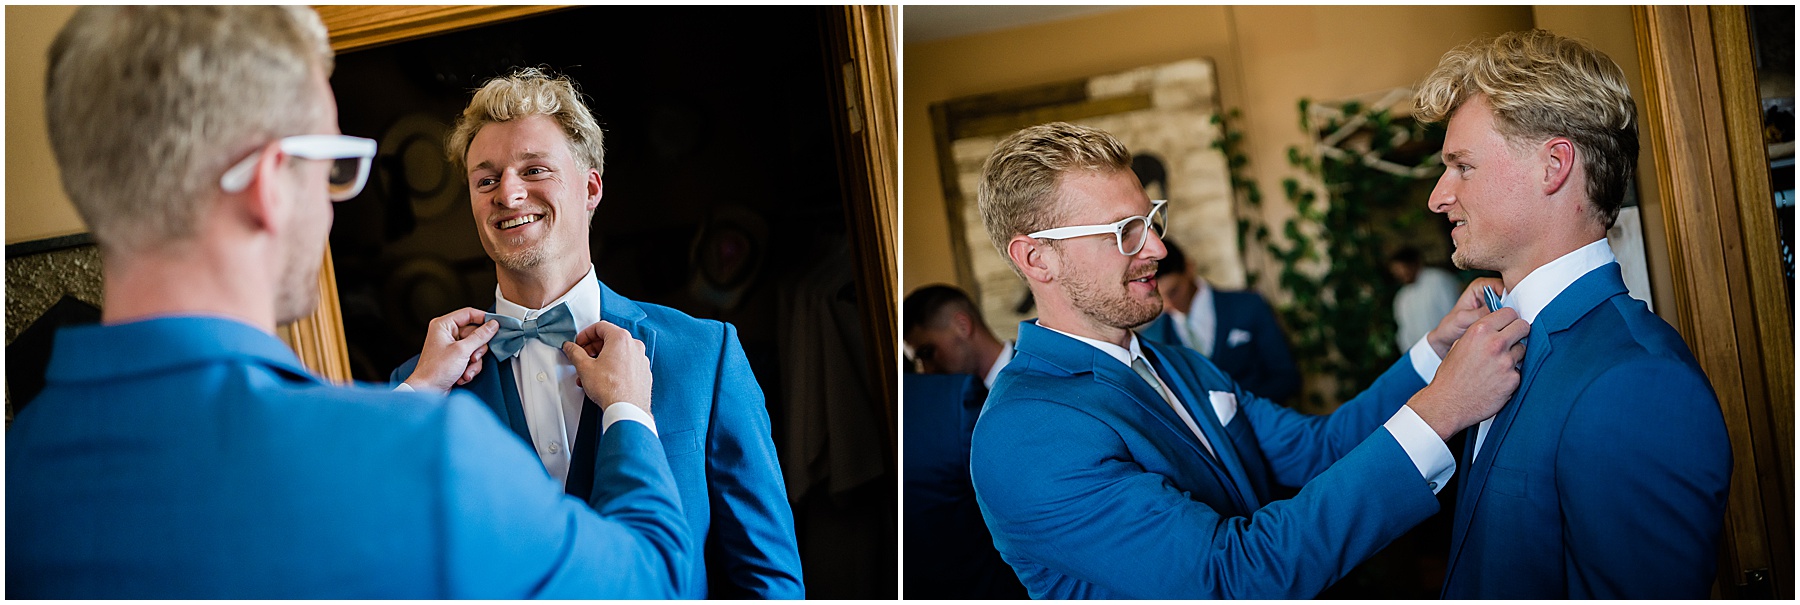 Fort Wayne wedding photographer captures groom getting ready in blue suit with groomsmen